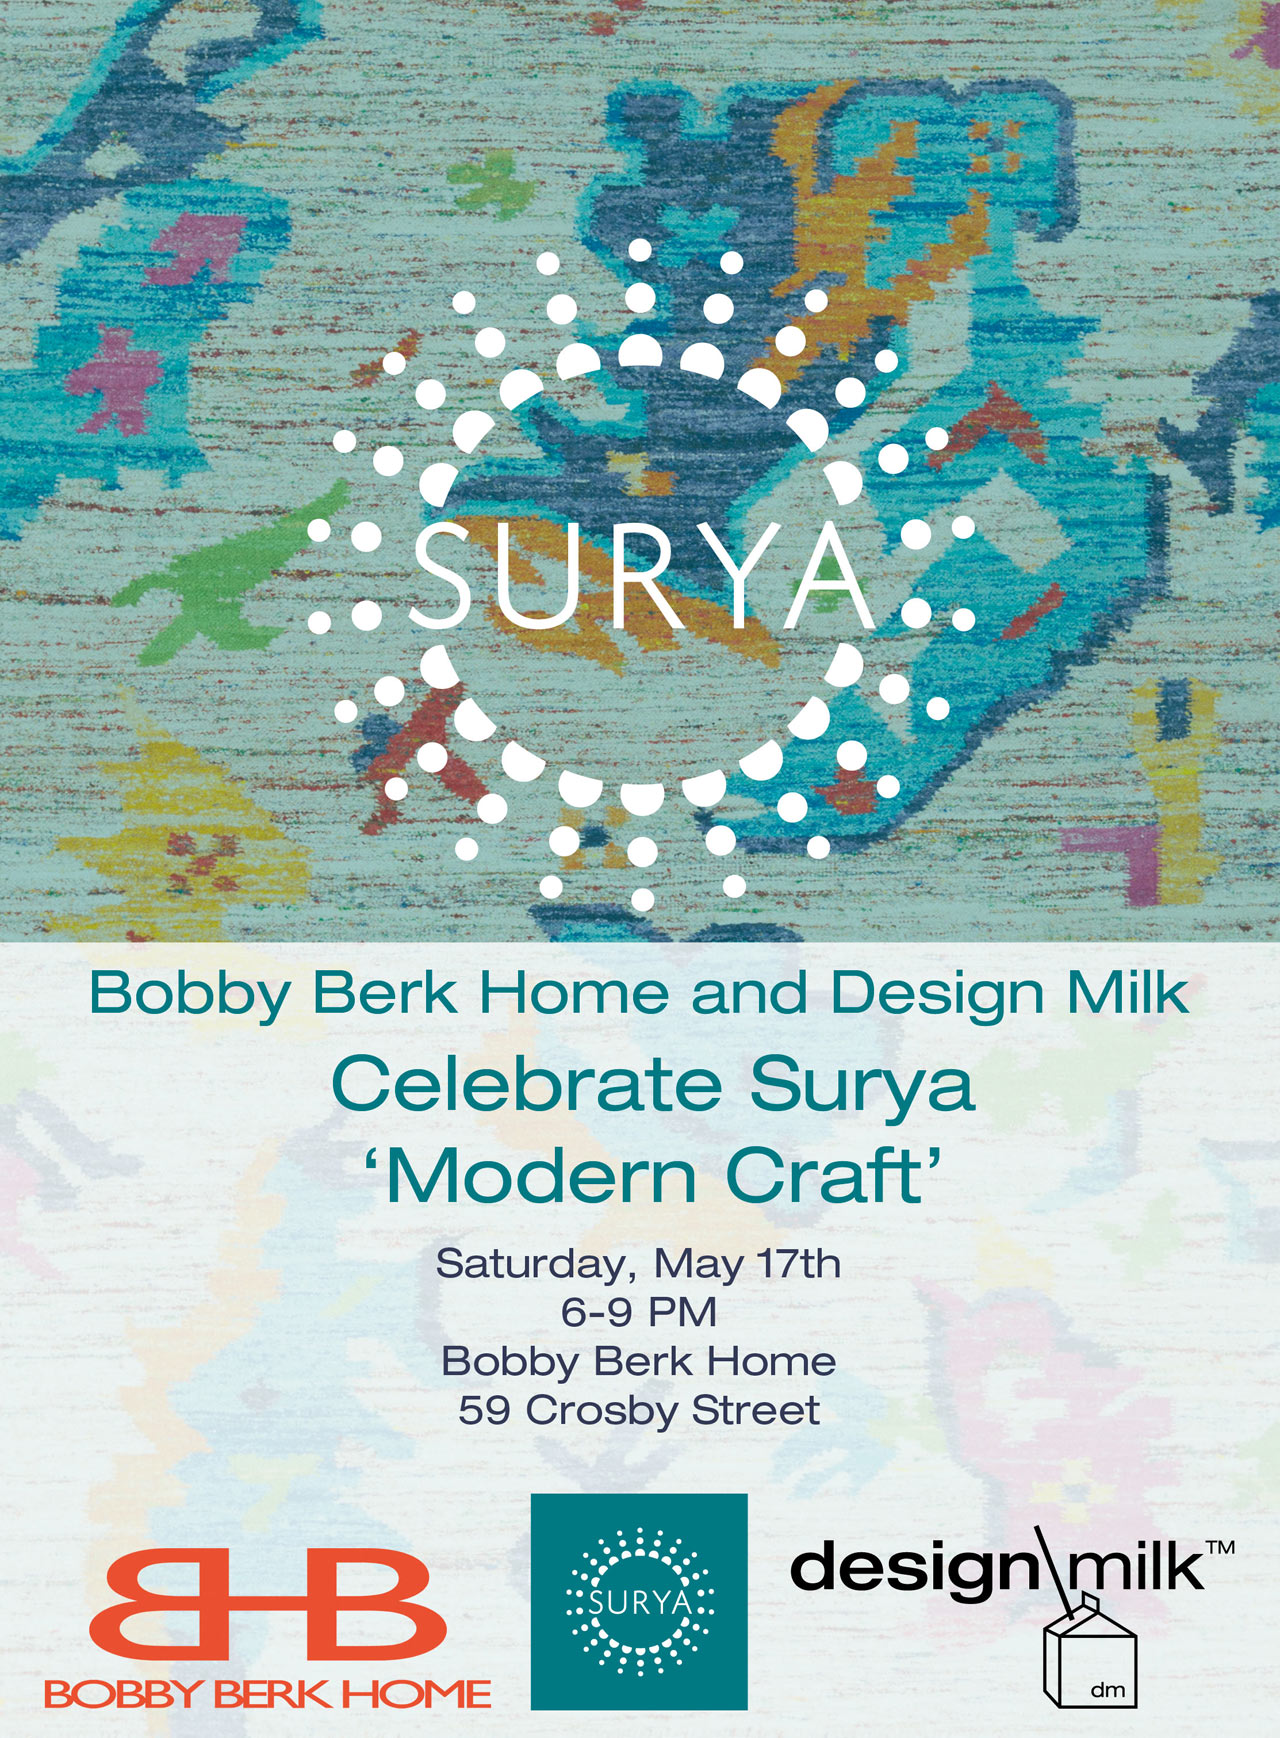 Celebrate Surya’s ‘Modern Craft’ ICFF Debut with Bobby Berk Home